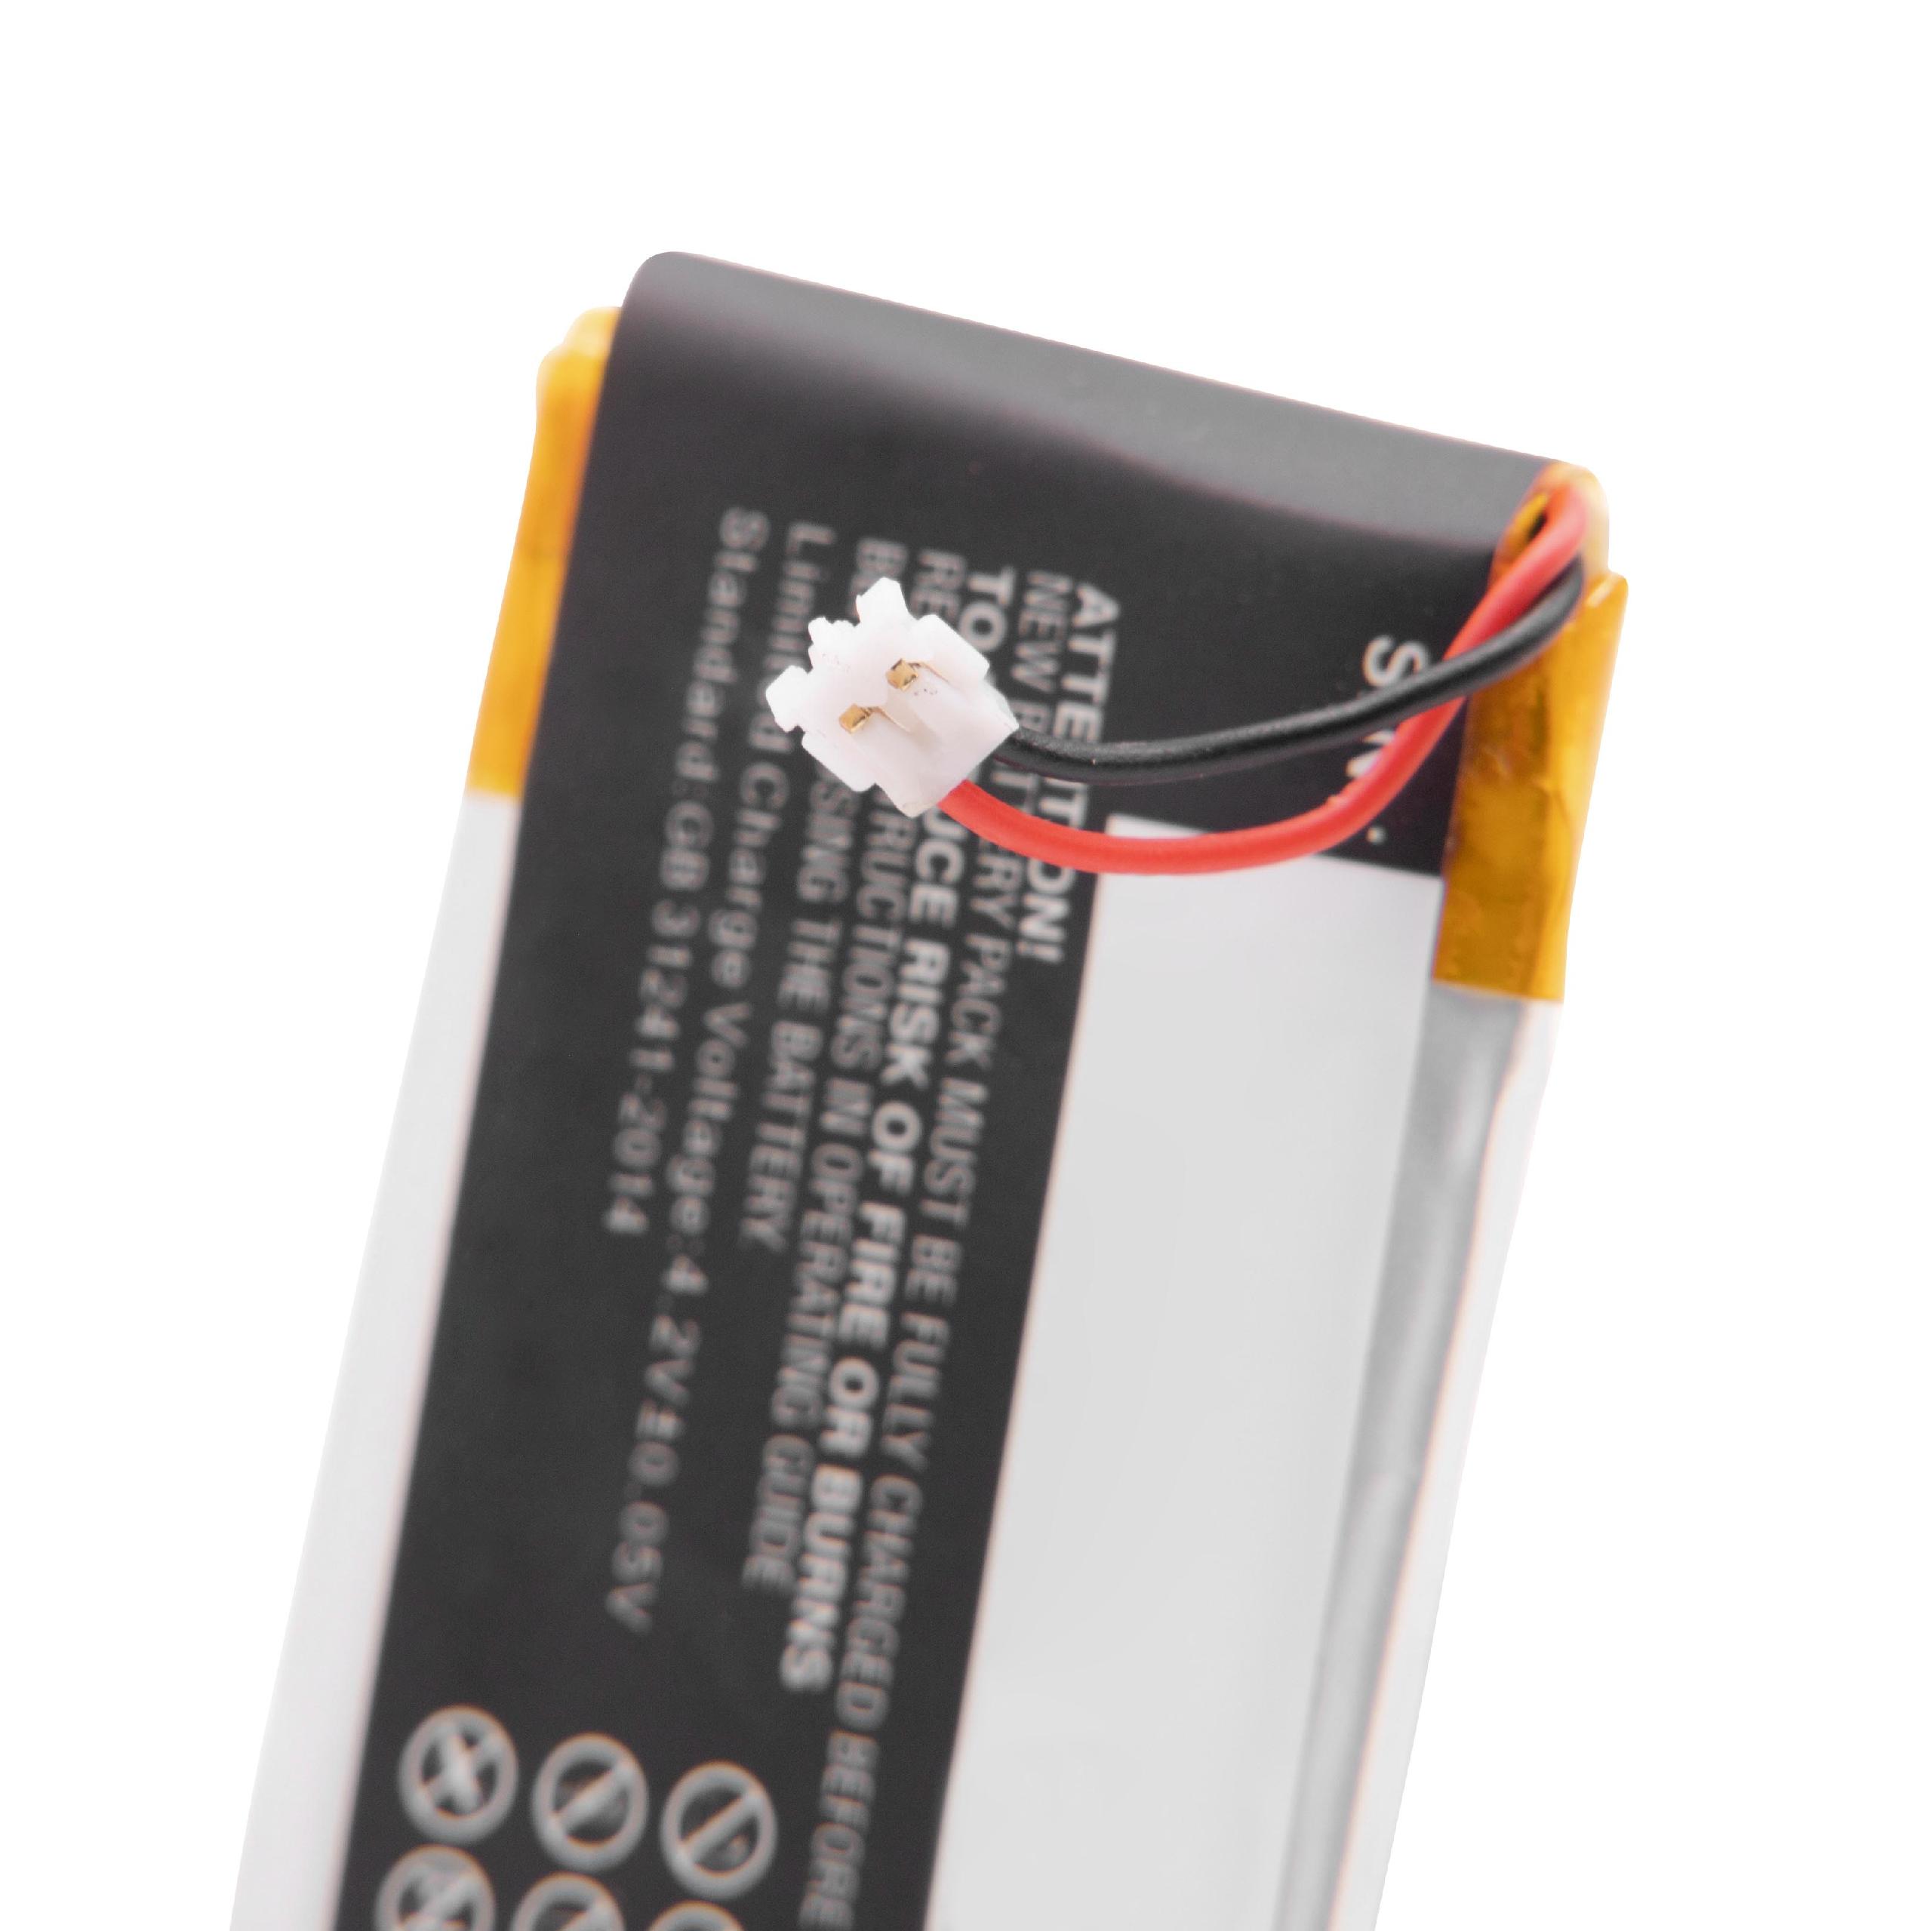 Smartwatch Battery Replacement for Garmin 361-00097-00 - 230mAh 3.7V Li-polymer